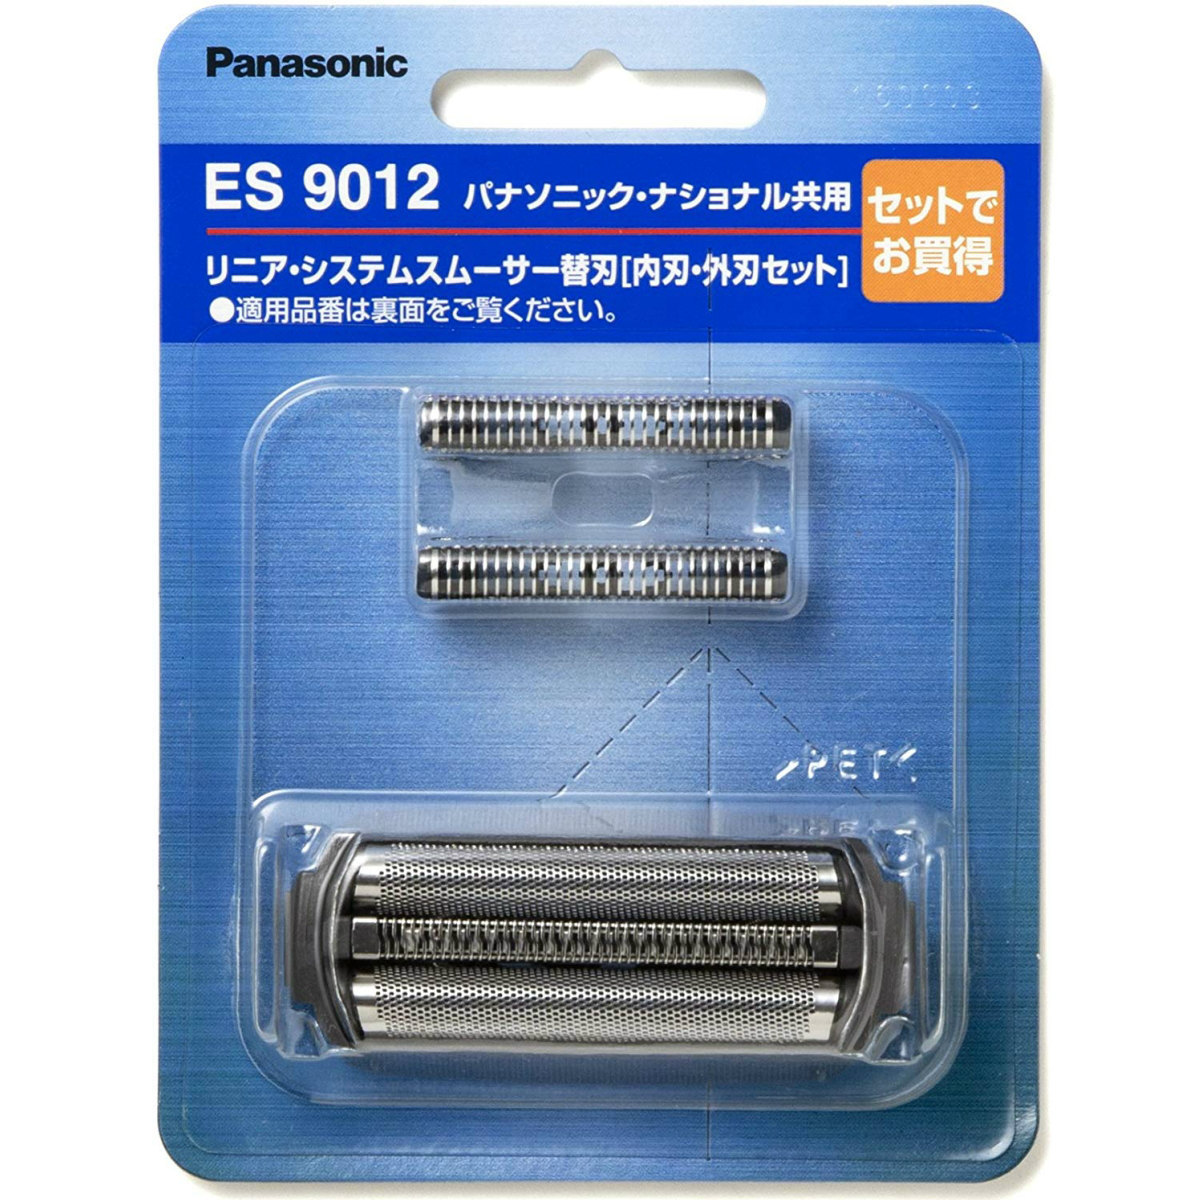 Panasonic パナソニック 替刃 メンズシェーバー用 セット刃 (外刃+内刃